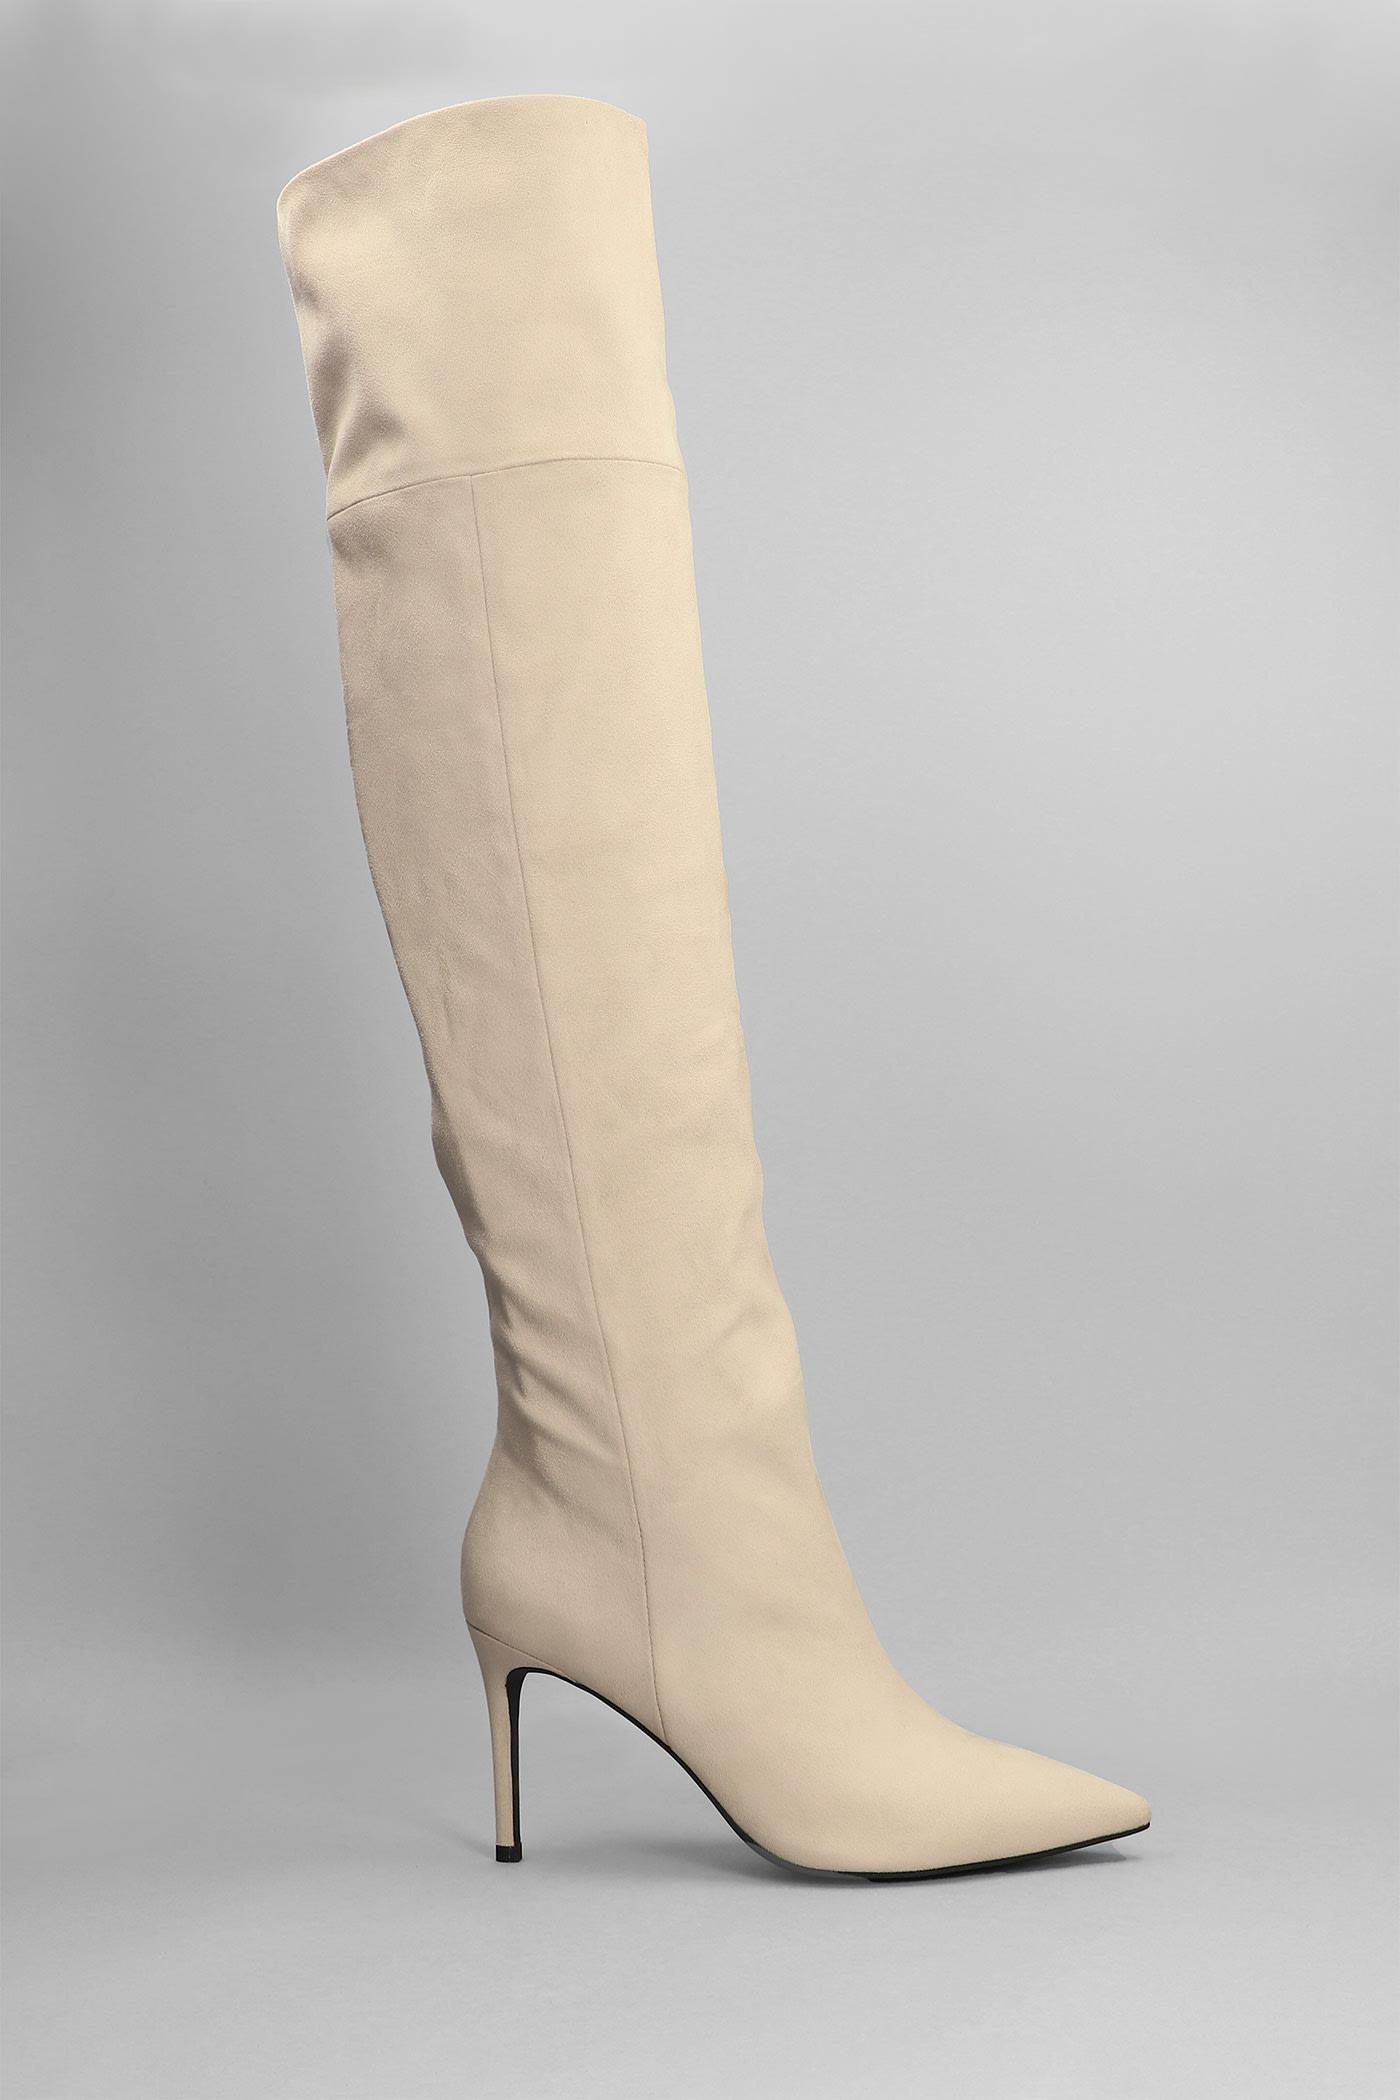 Jeffrey Campbell Pillar-hi High Heels Boots In Beige Suede in White | Lyst